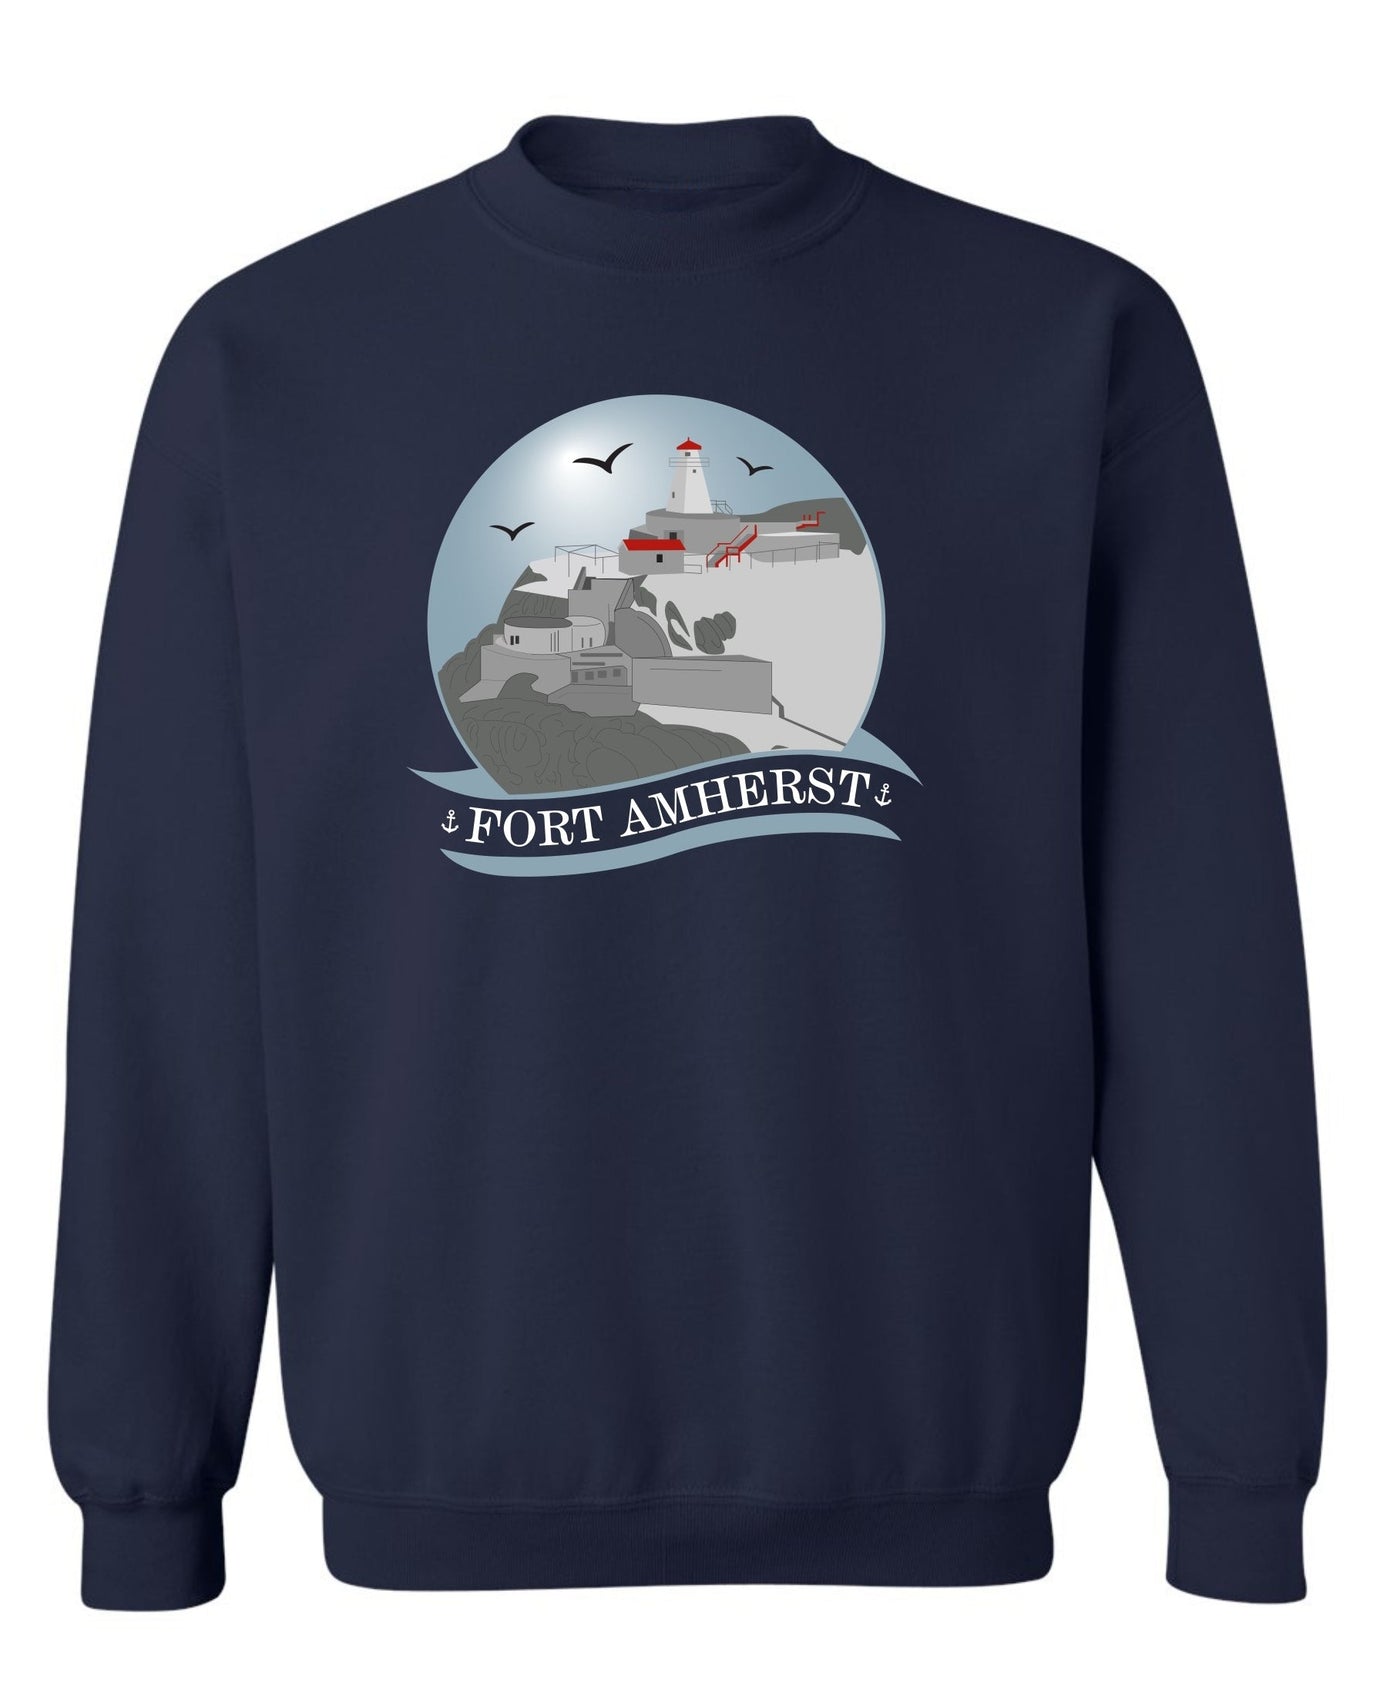 "Fort Amherst" Unisex Crewneck Sweatshirt